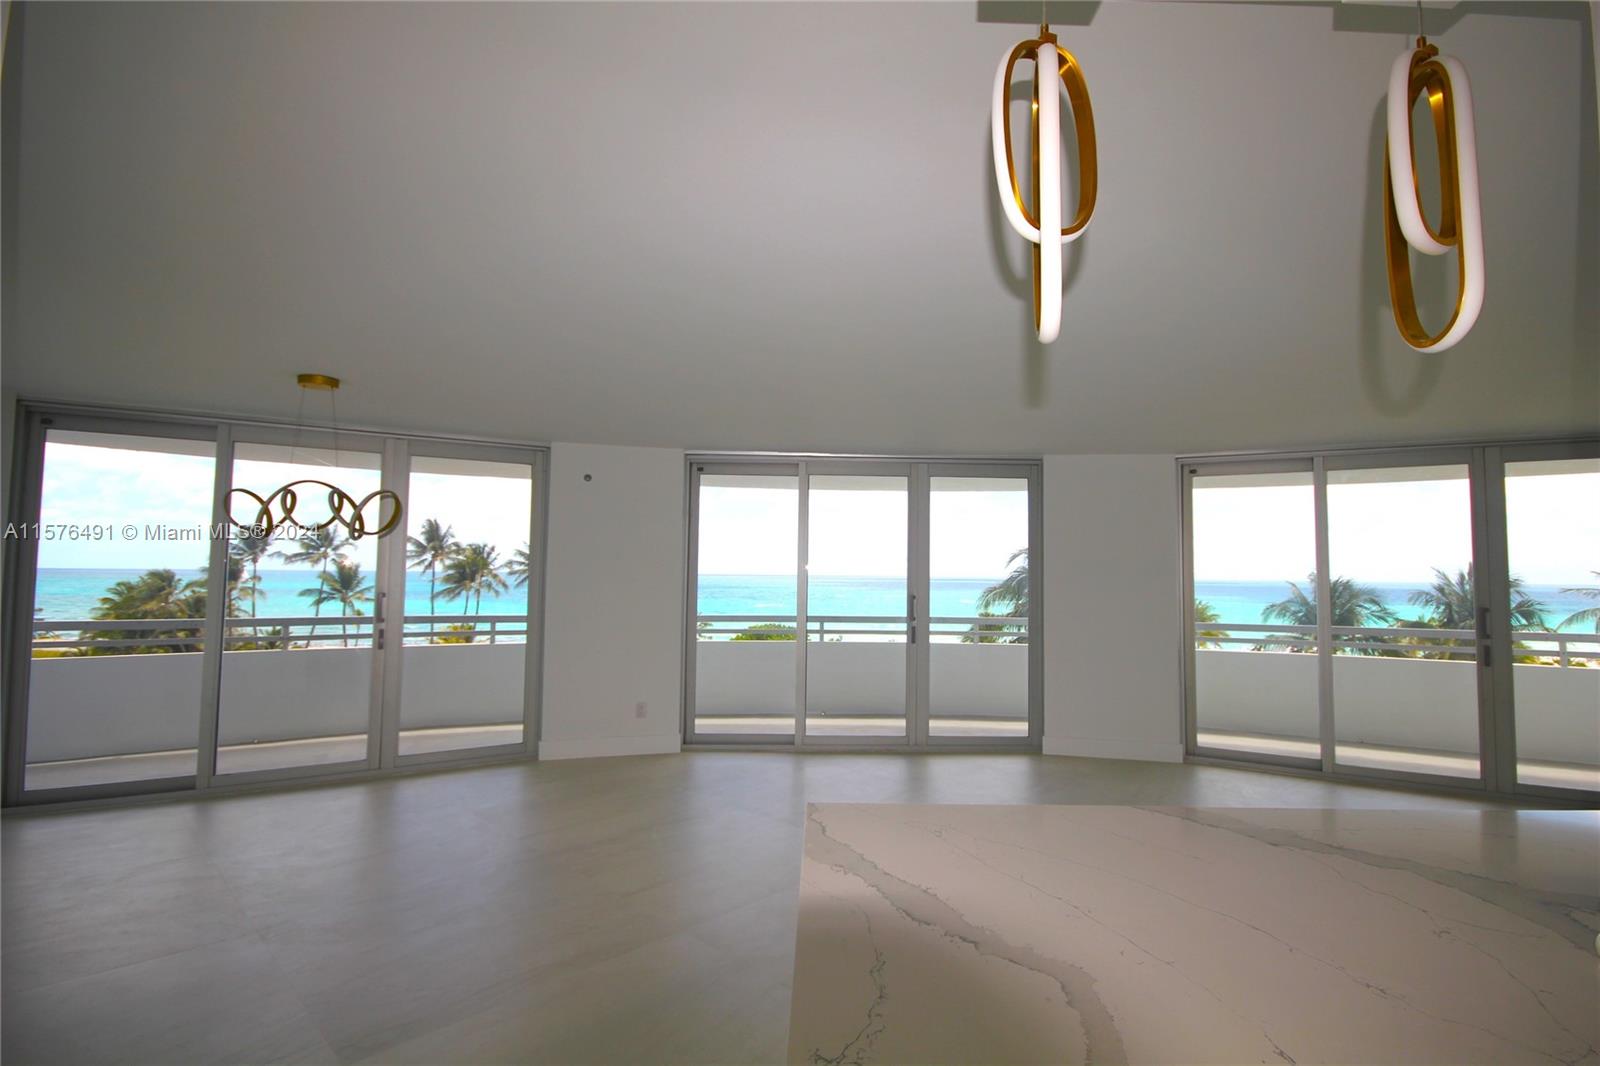 Rental Property at 5161 Collins Ave 614, Miami Beach, Miami-Dade County, Florida - Bedrooms: 2 
Bathrooms: 2  - $6,700 MO.